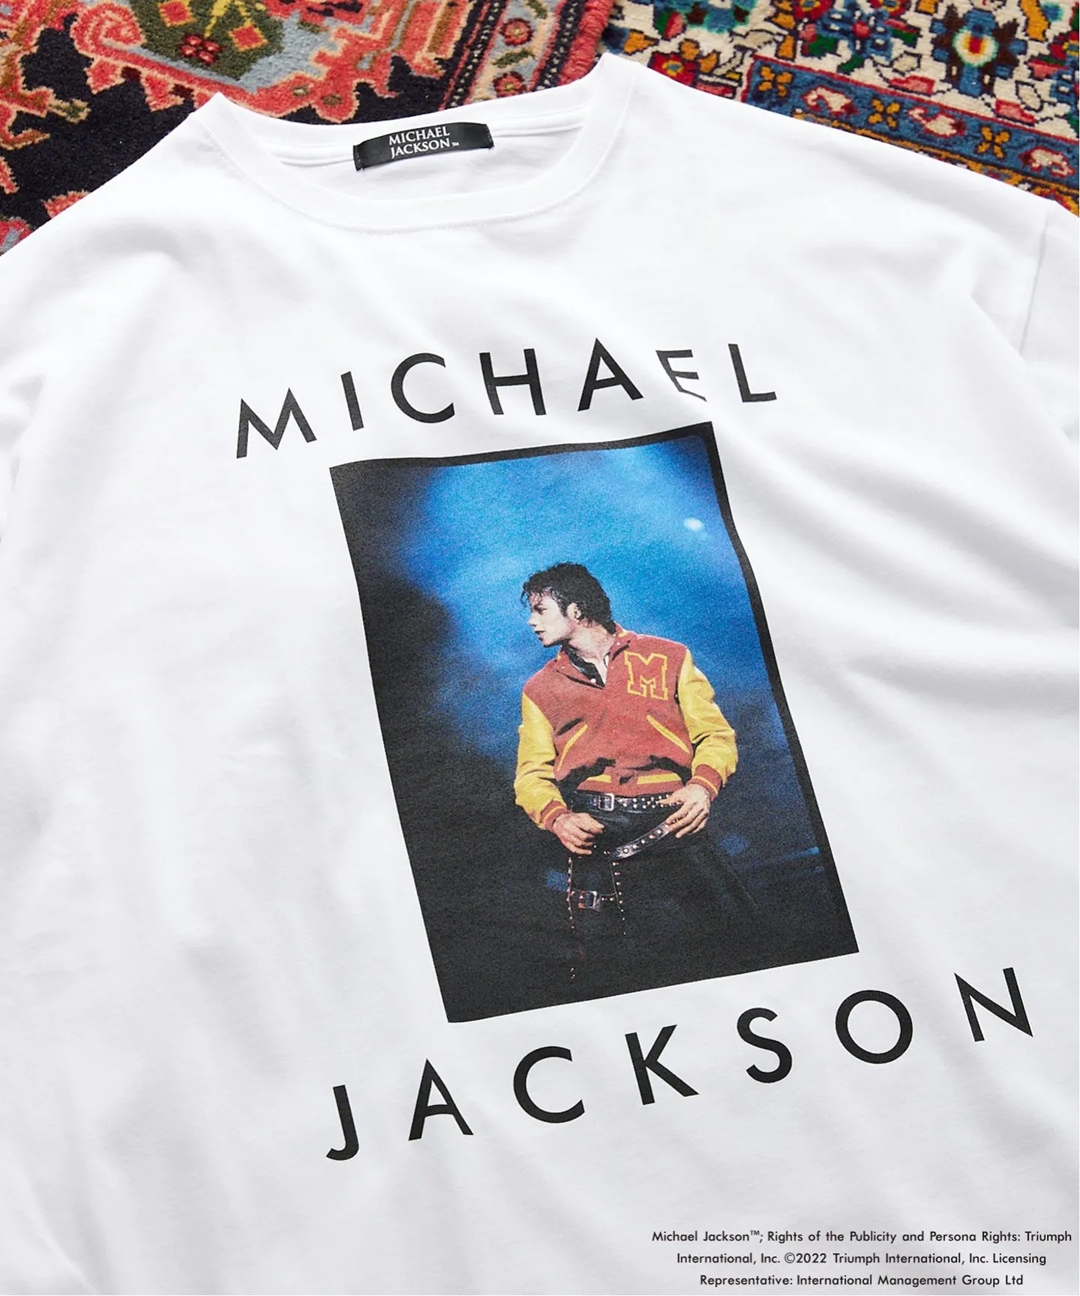 JOURNAL STANDARD relume「MICHAEL JACKSON/マイケルジャクソン」BEST TRACKS TEEが8月中旬発売 (ジャーナルスタンダード)